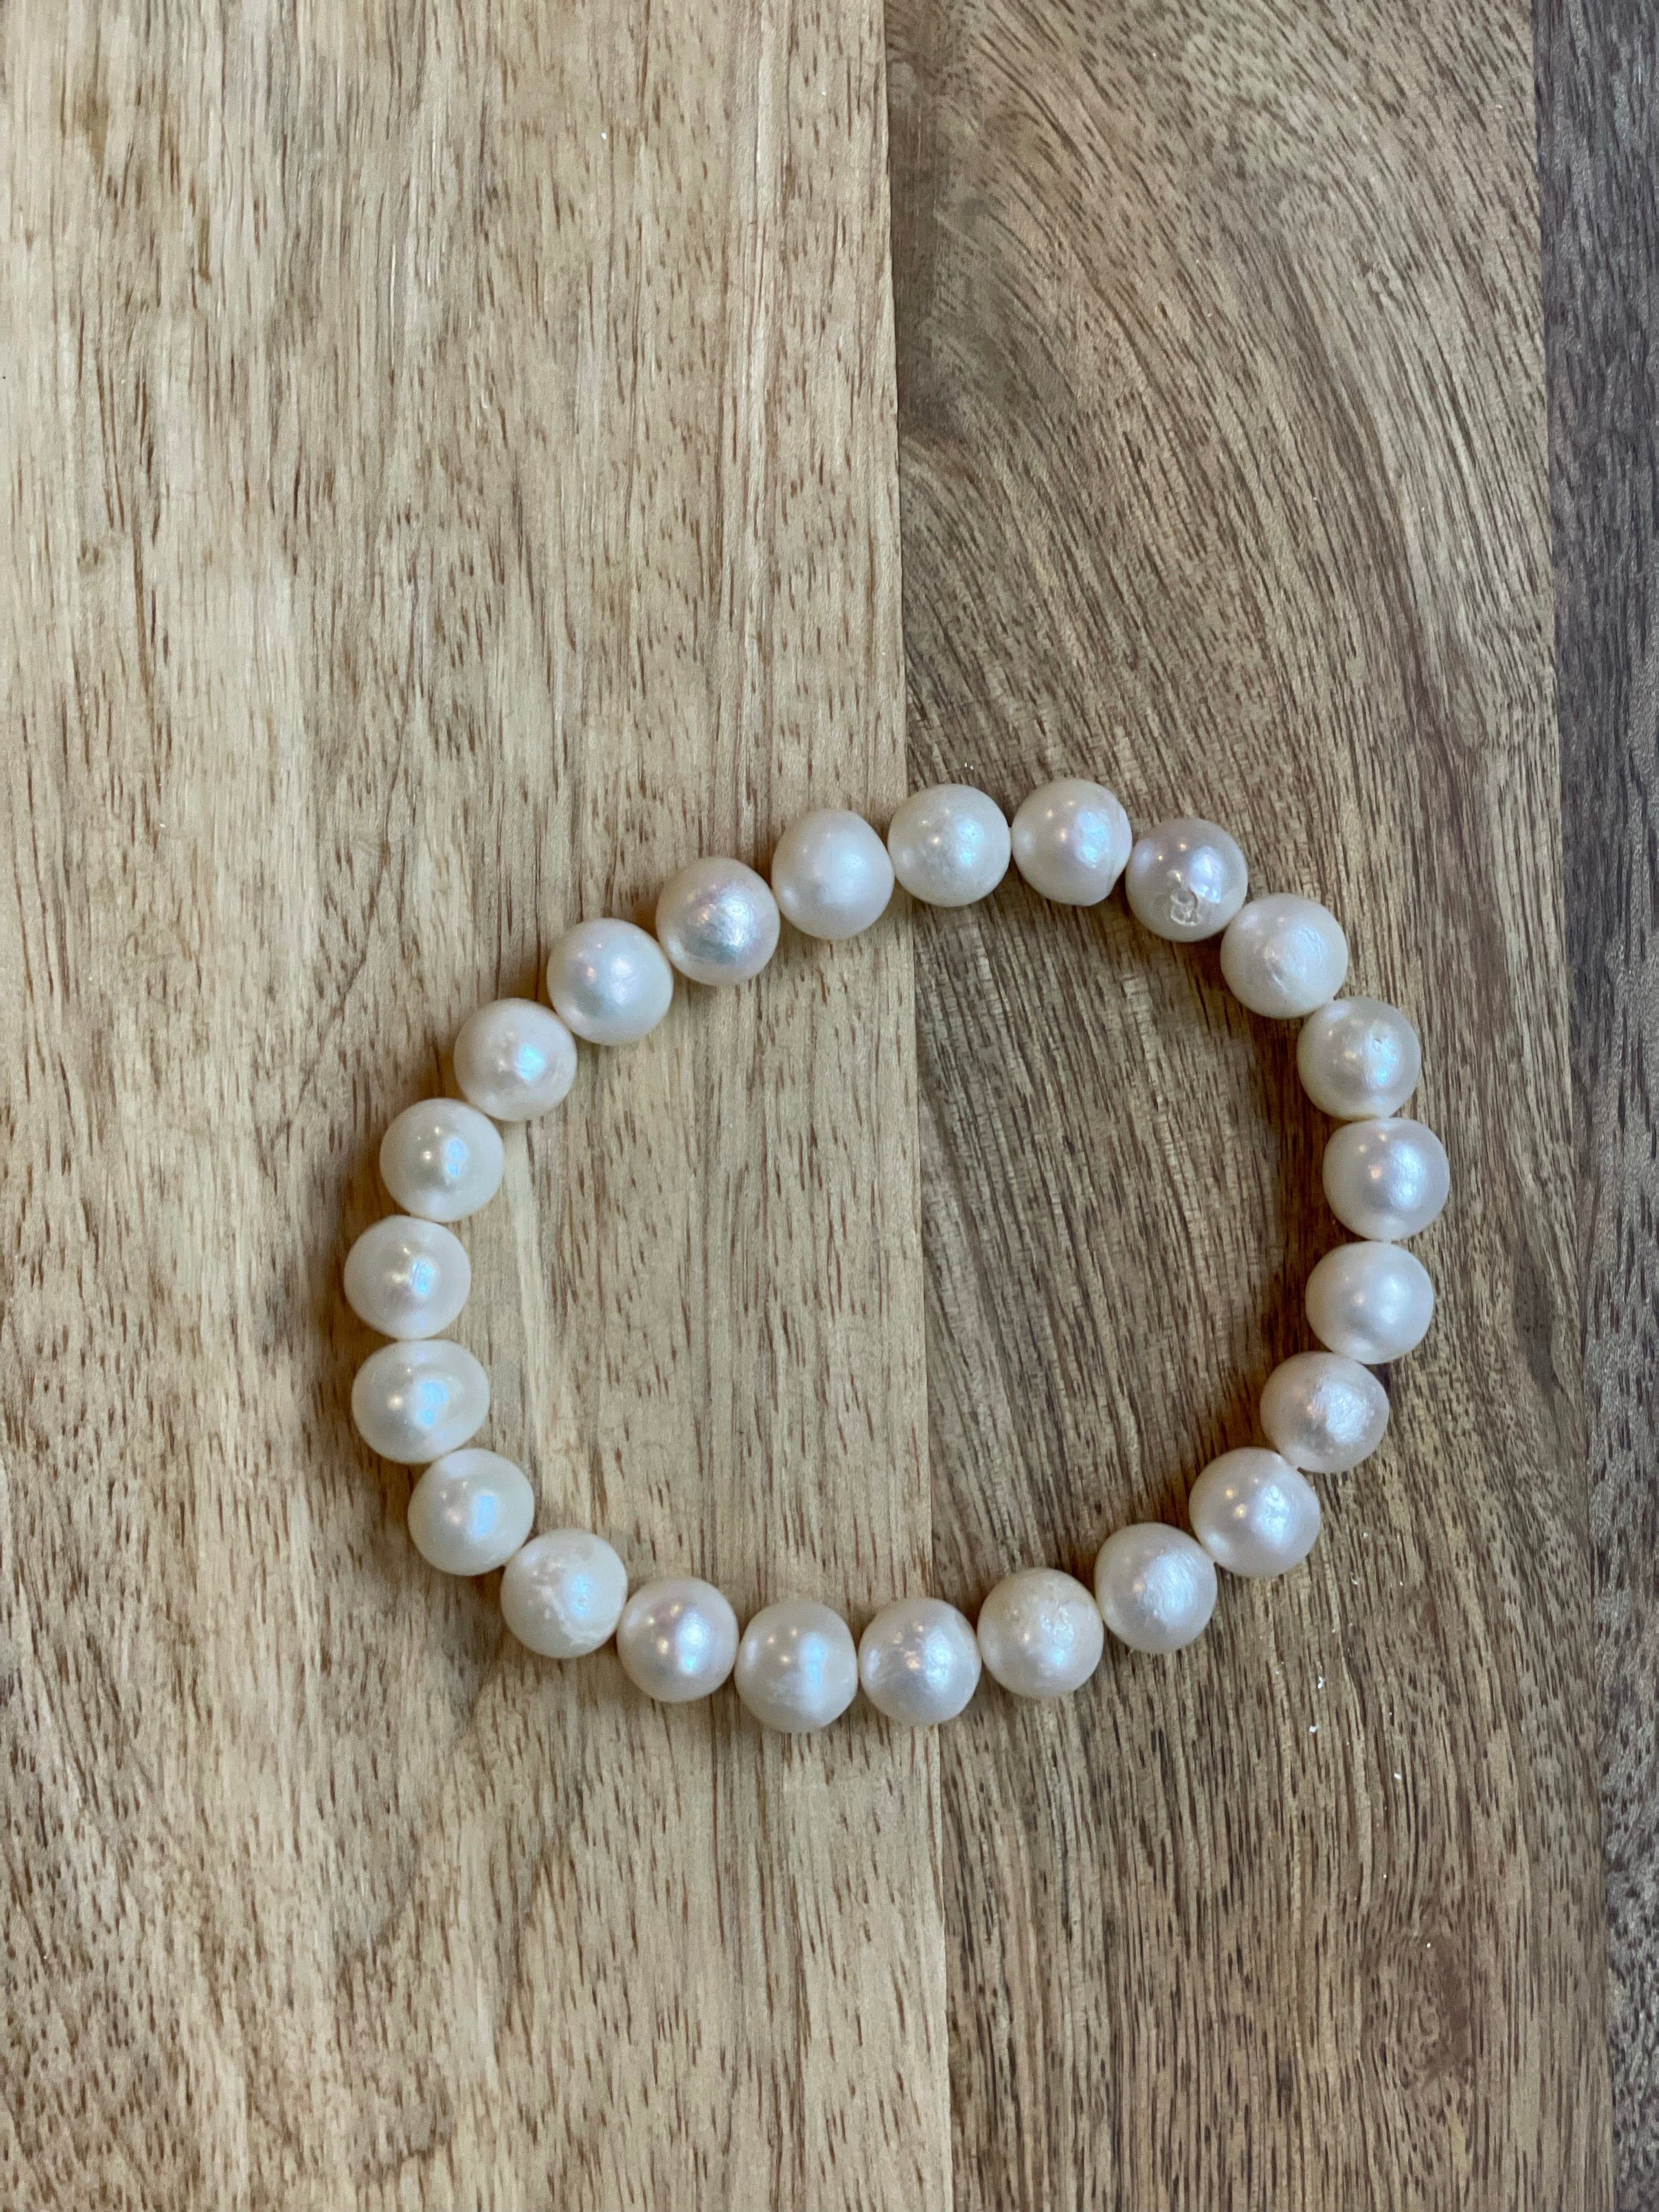 Cultured Pearl Bracelet.